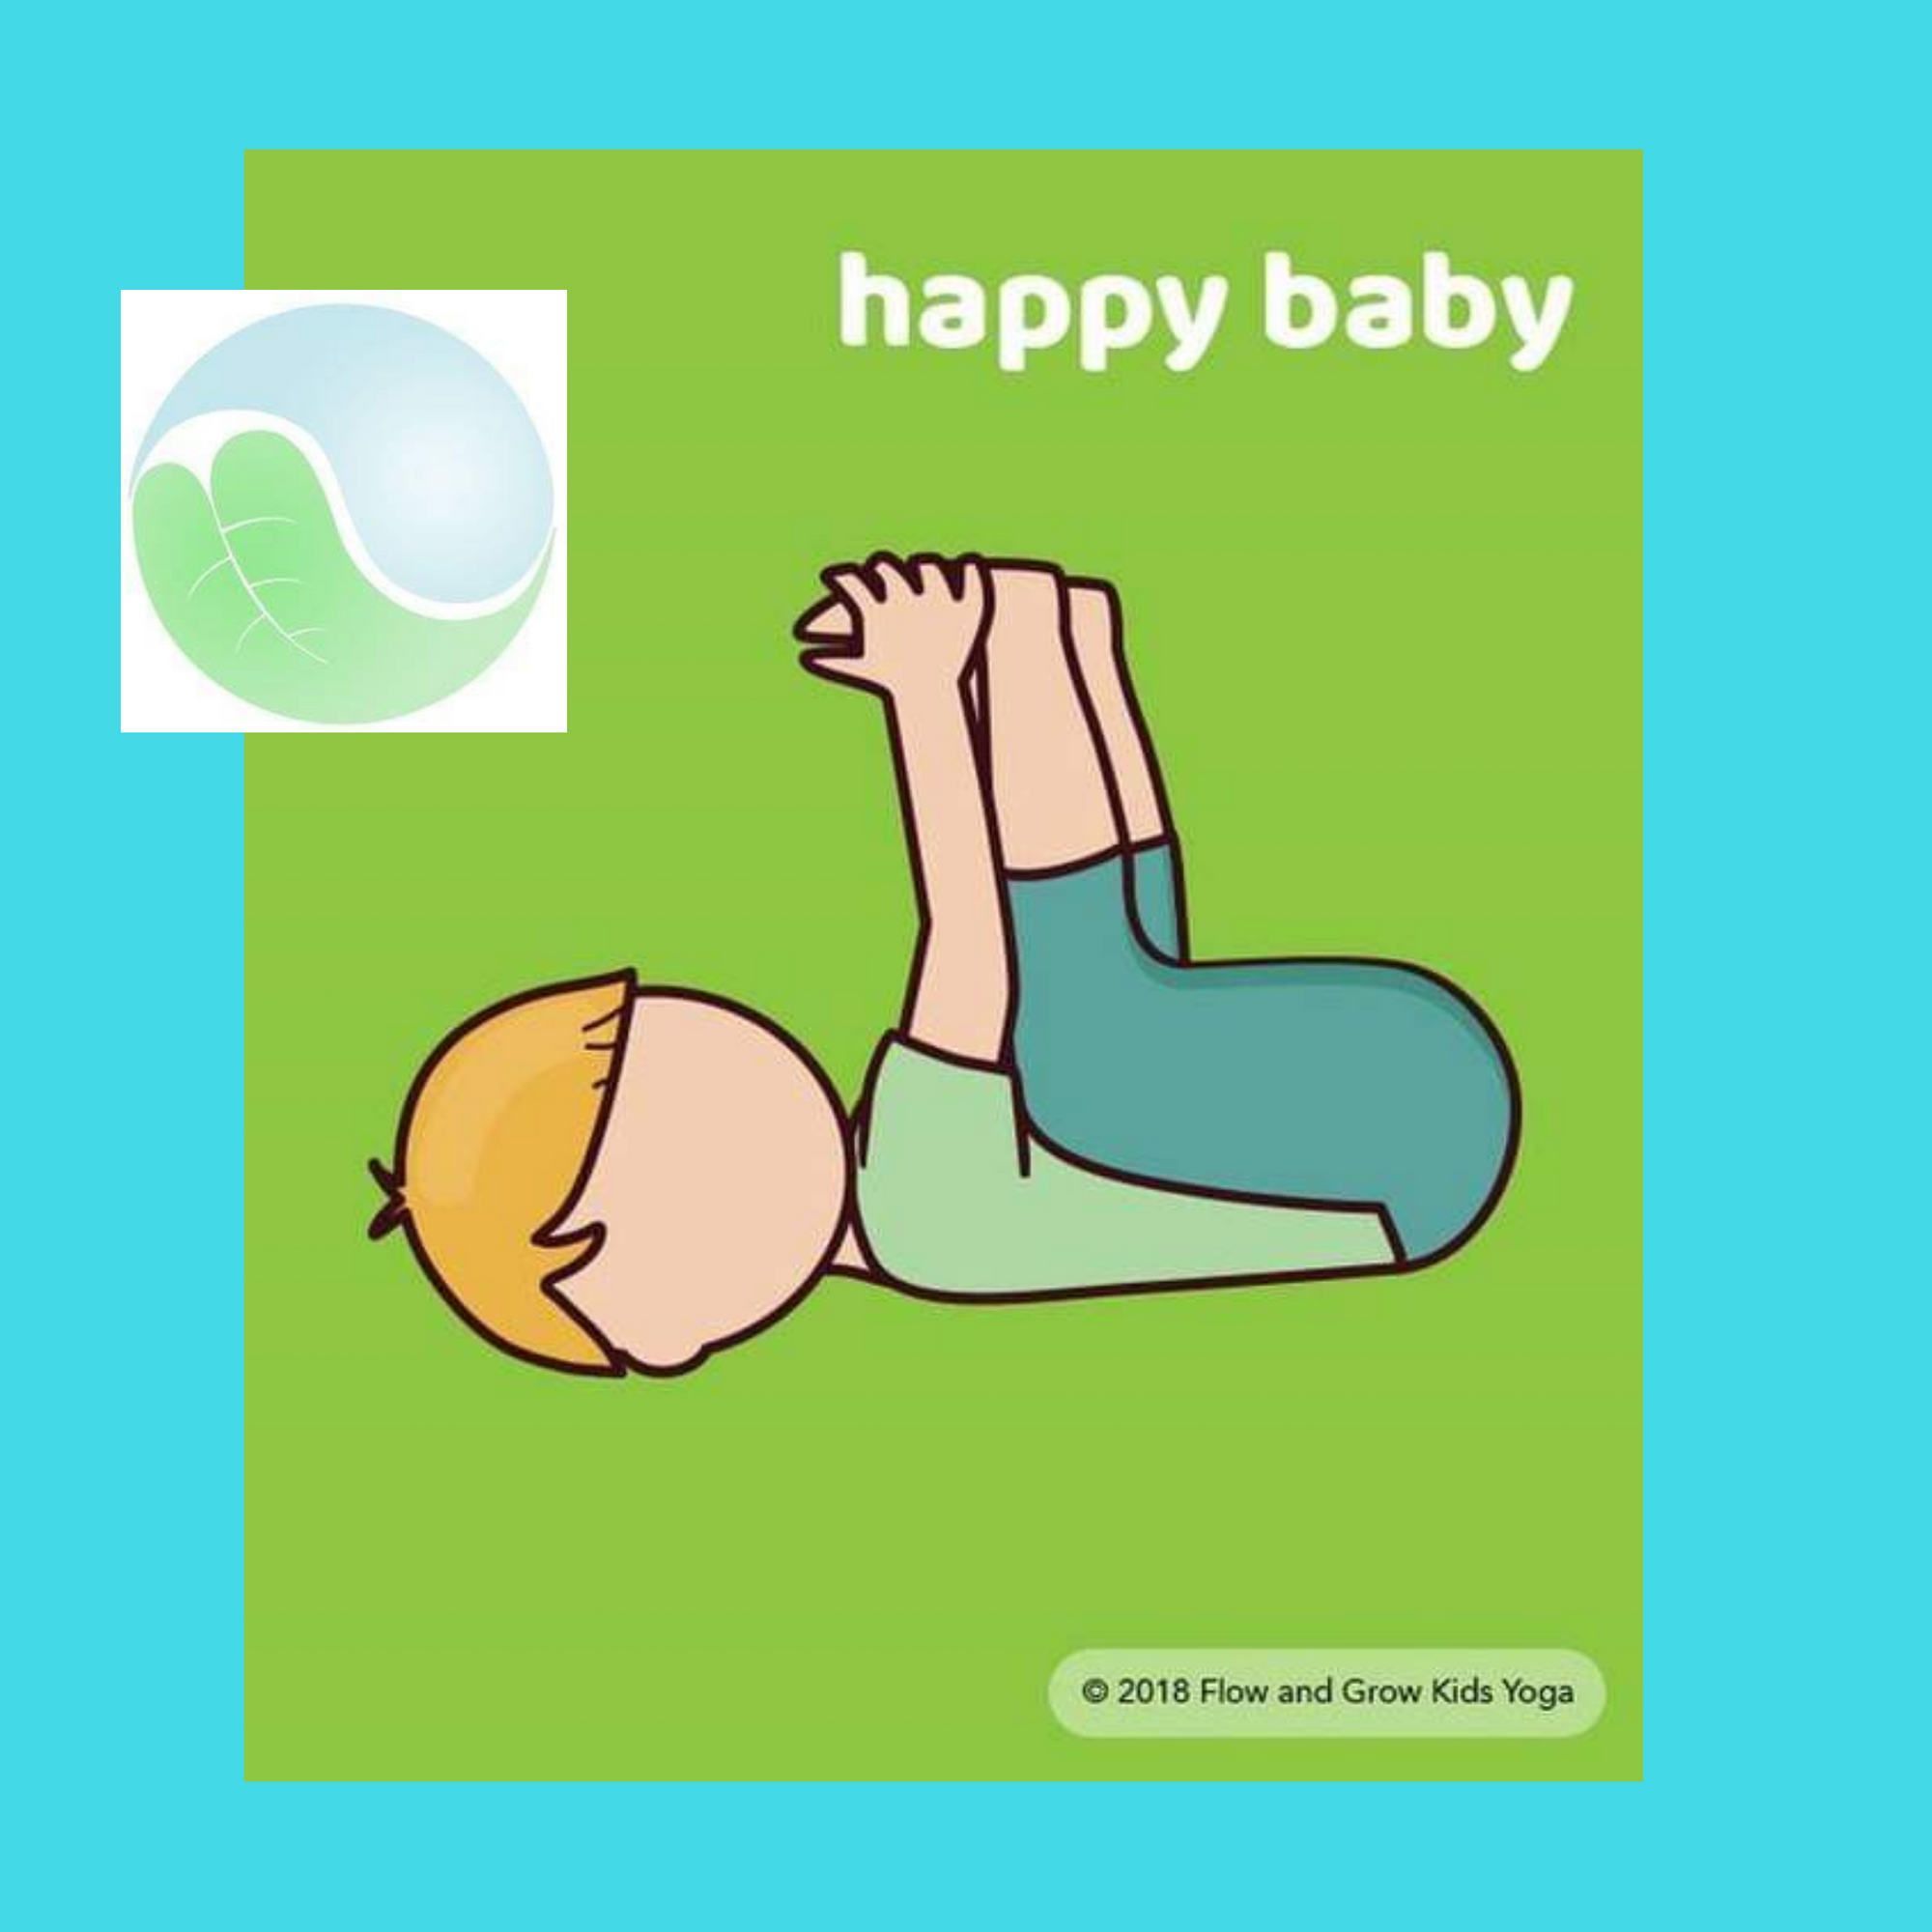 BENEFITS OF HAPPY BABY POSE - Vinyasa Yoga Academy Blogs